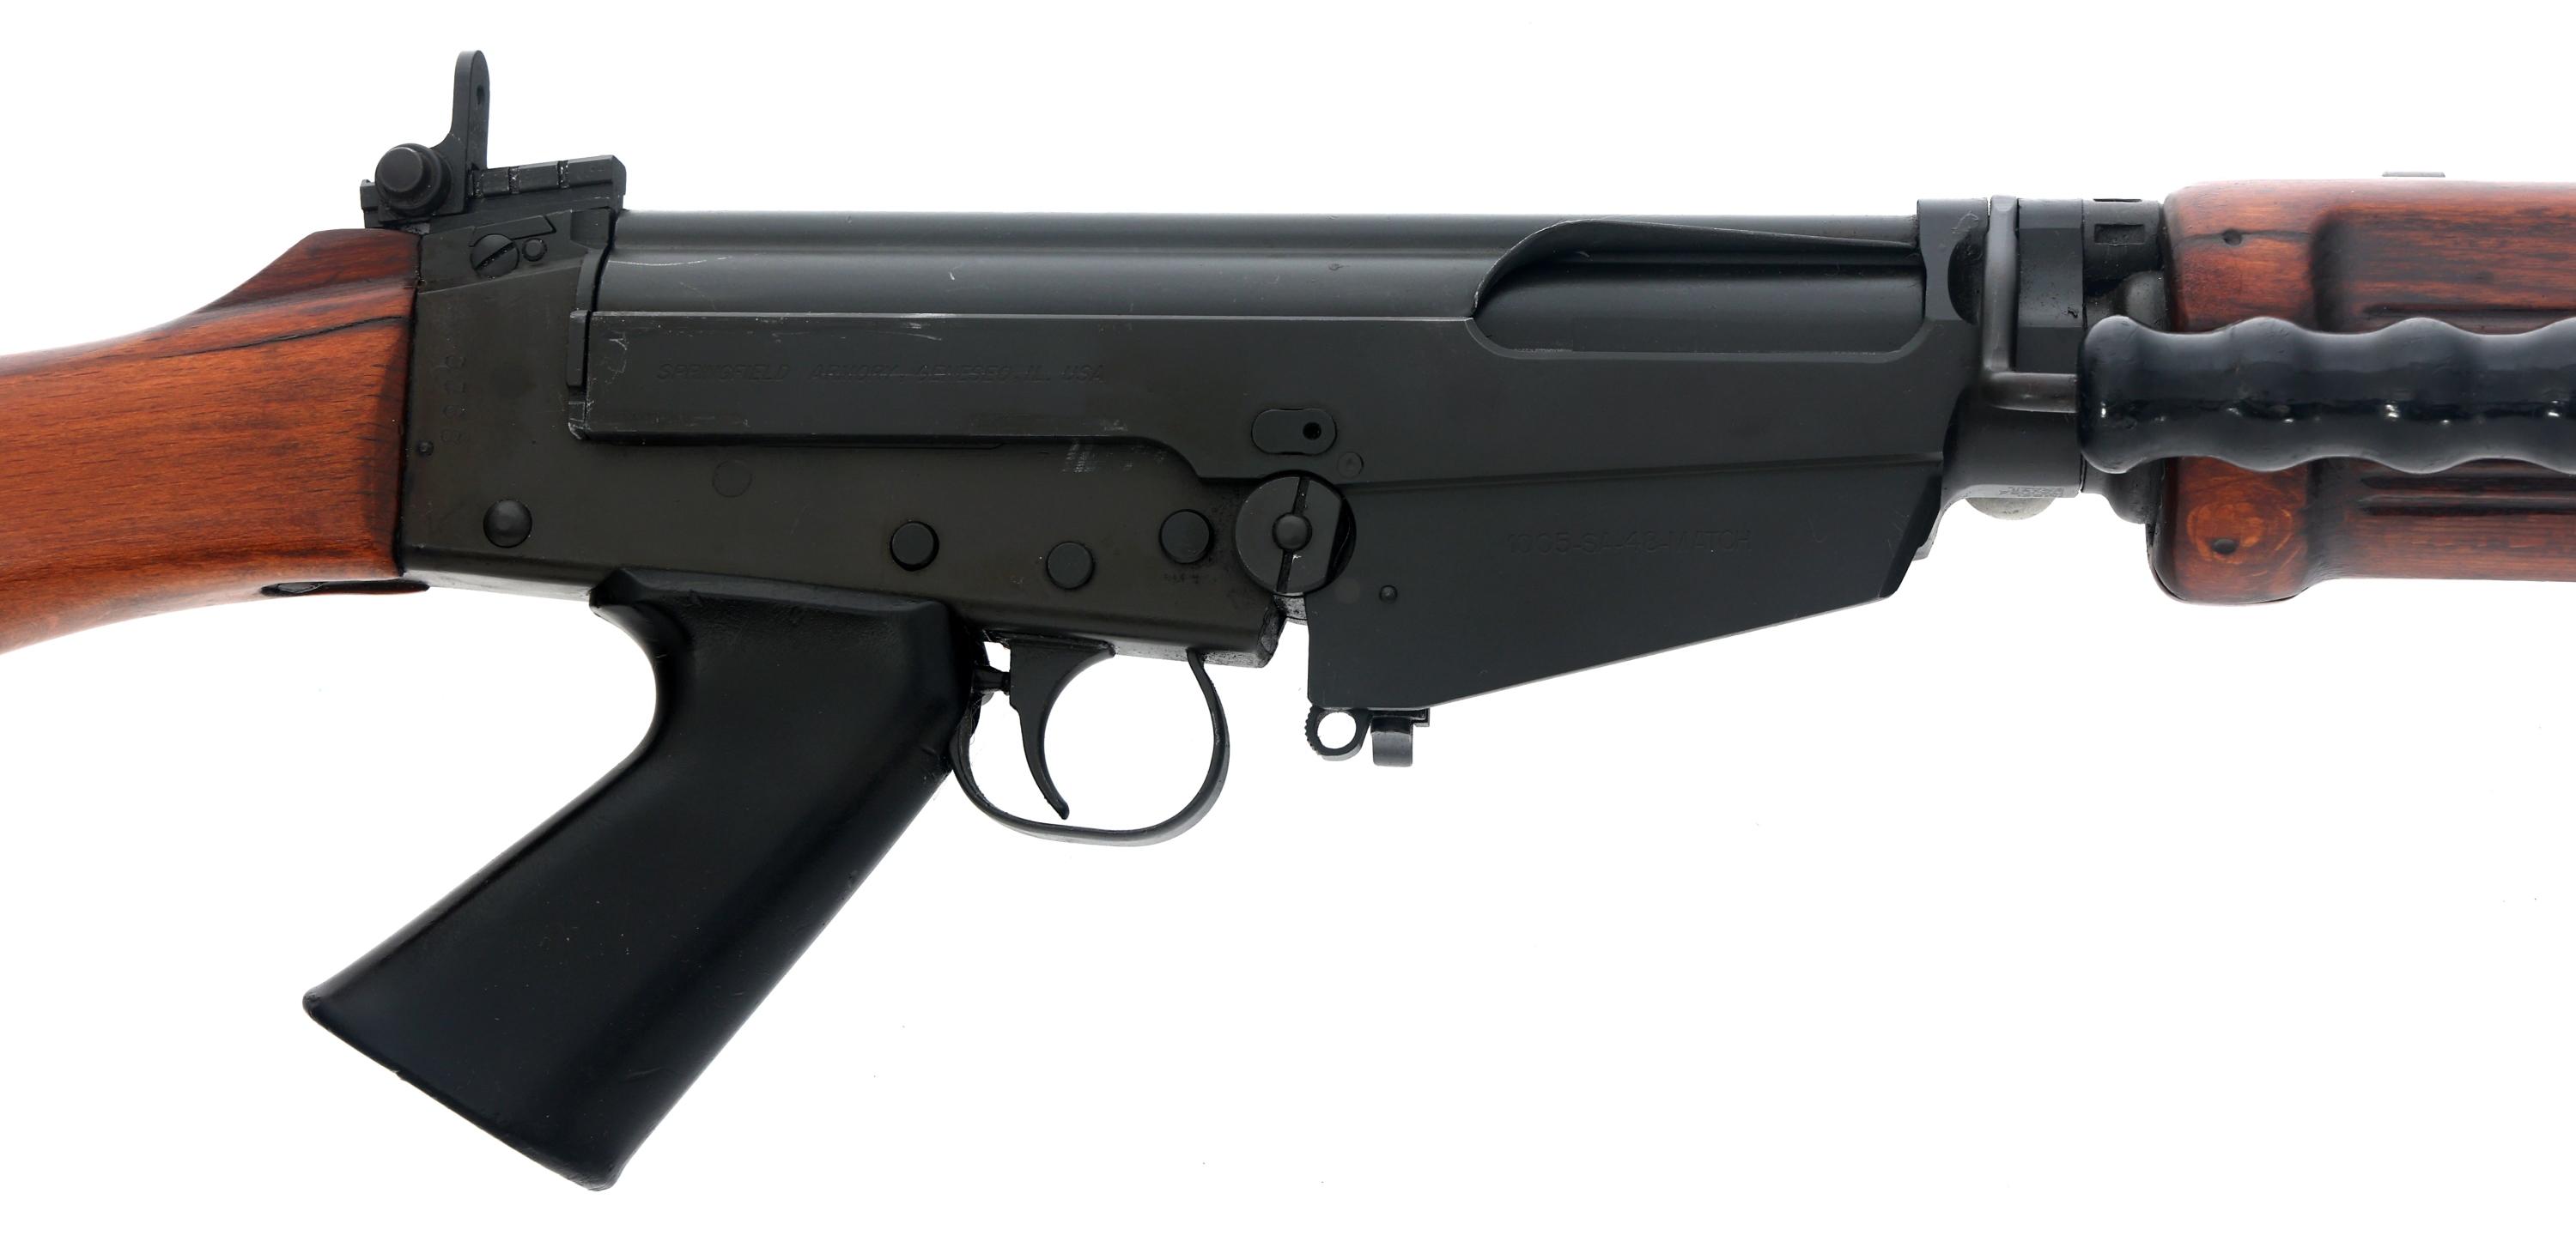 SPRINGFIELD ARMORY INC MODEL SAR-48 7.62mm RIFLE